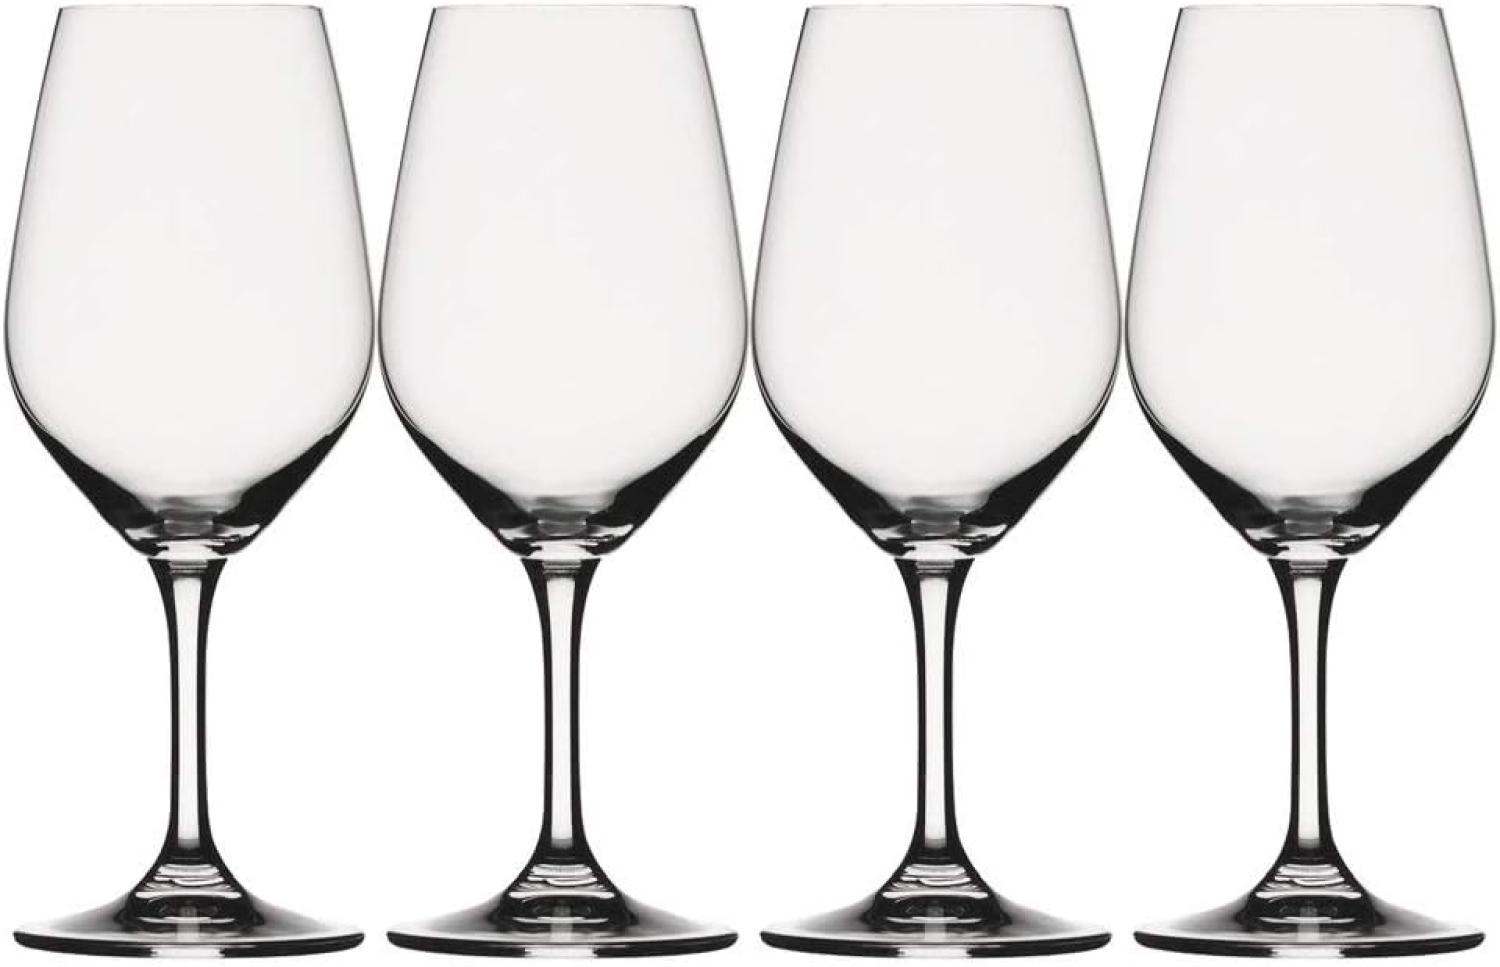 Spiegelau Special Glasses Weinglas Profi Tasting, 4er Set, Rotweinglas, Wein Glas, Kristallglas, 260 ml, 4631671 Bild 1